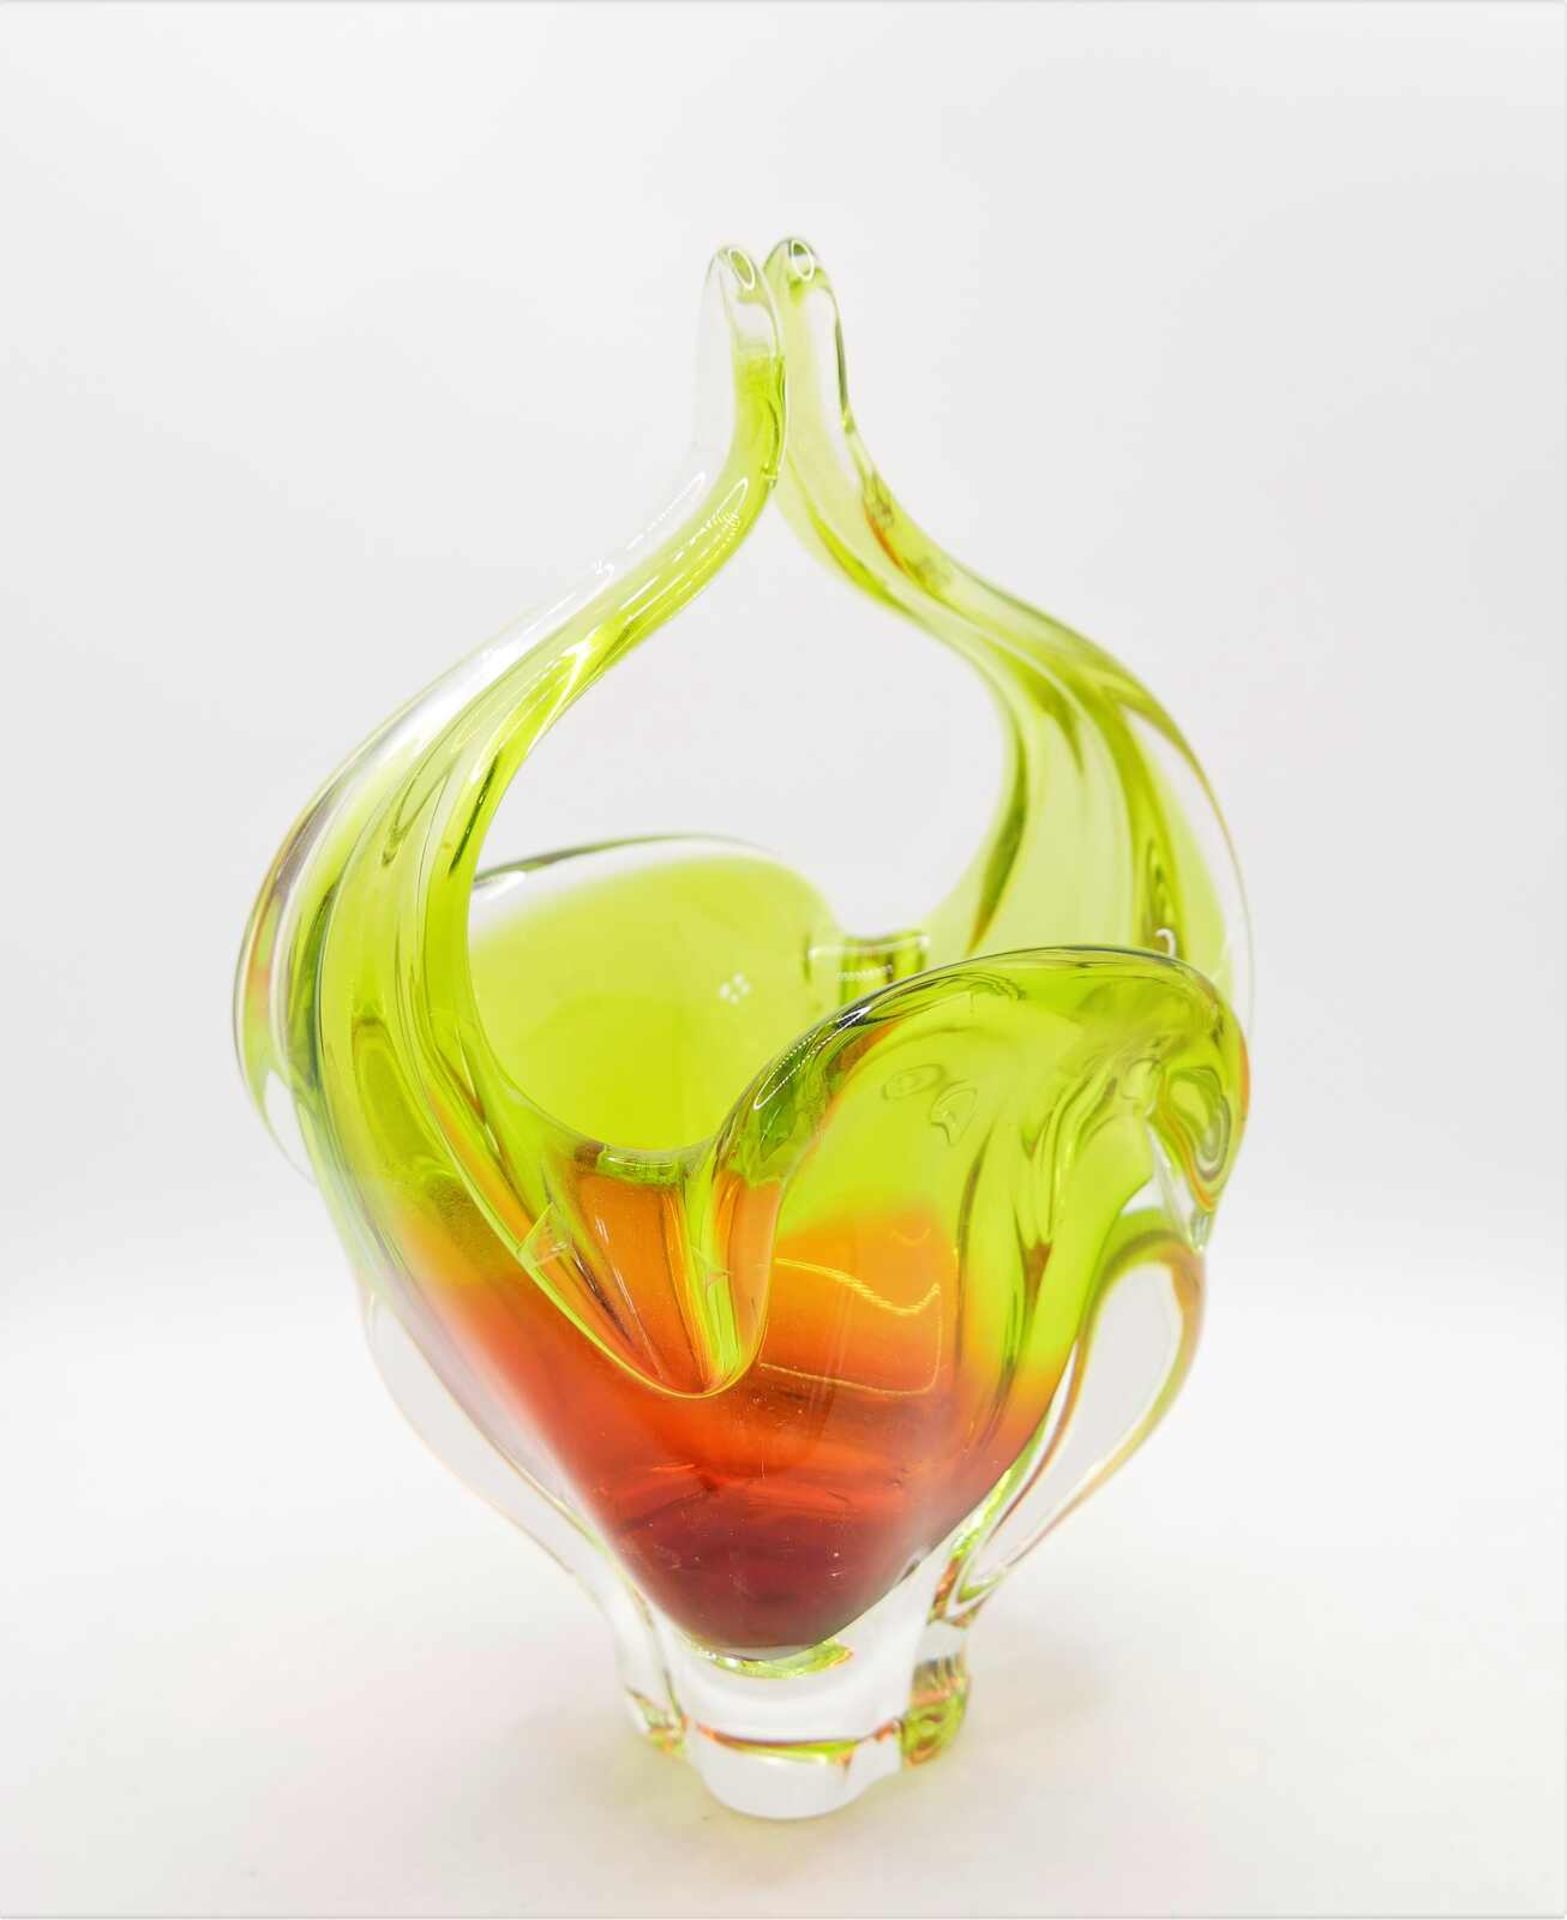 Murano Henkelschale rot / grün. Höhe ca. 22,5 cm. Sehr guter Zustand.Murano handle bowl red / gre - Image 3 of 3